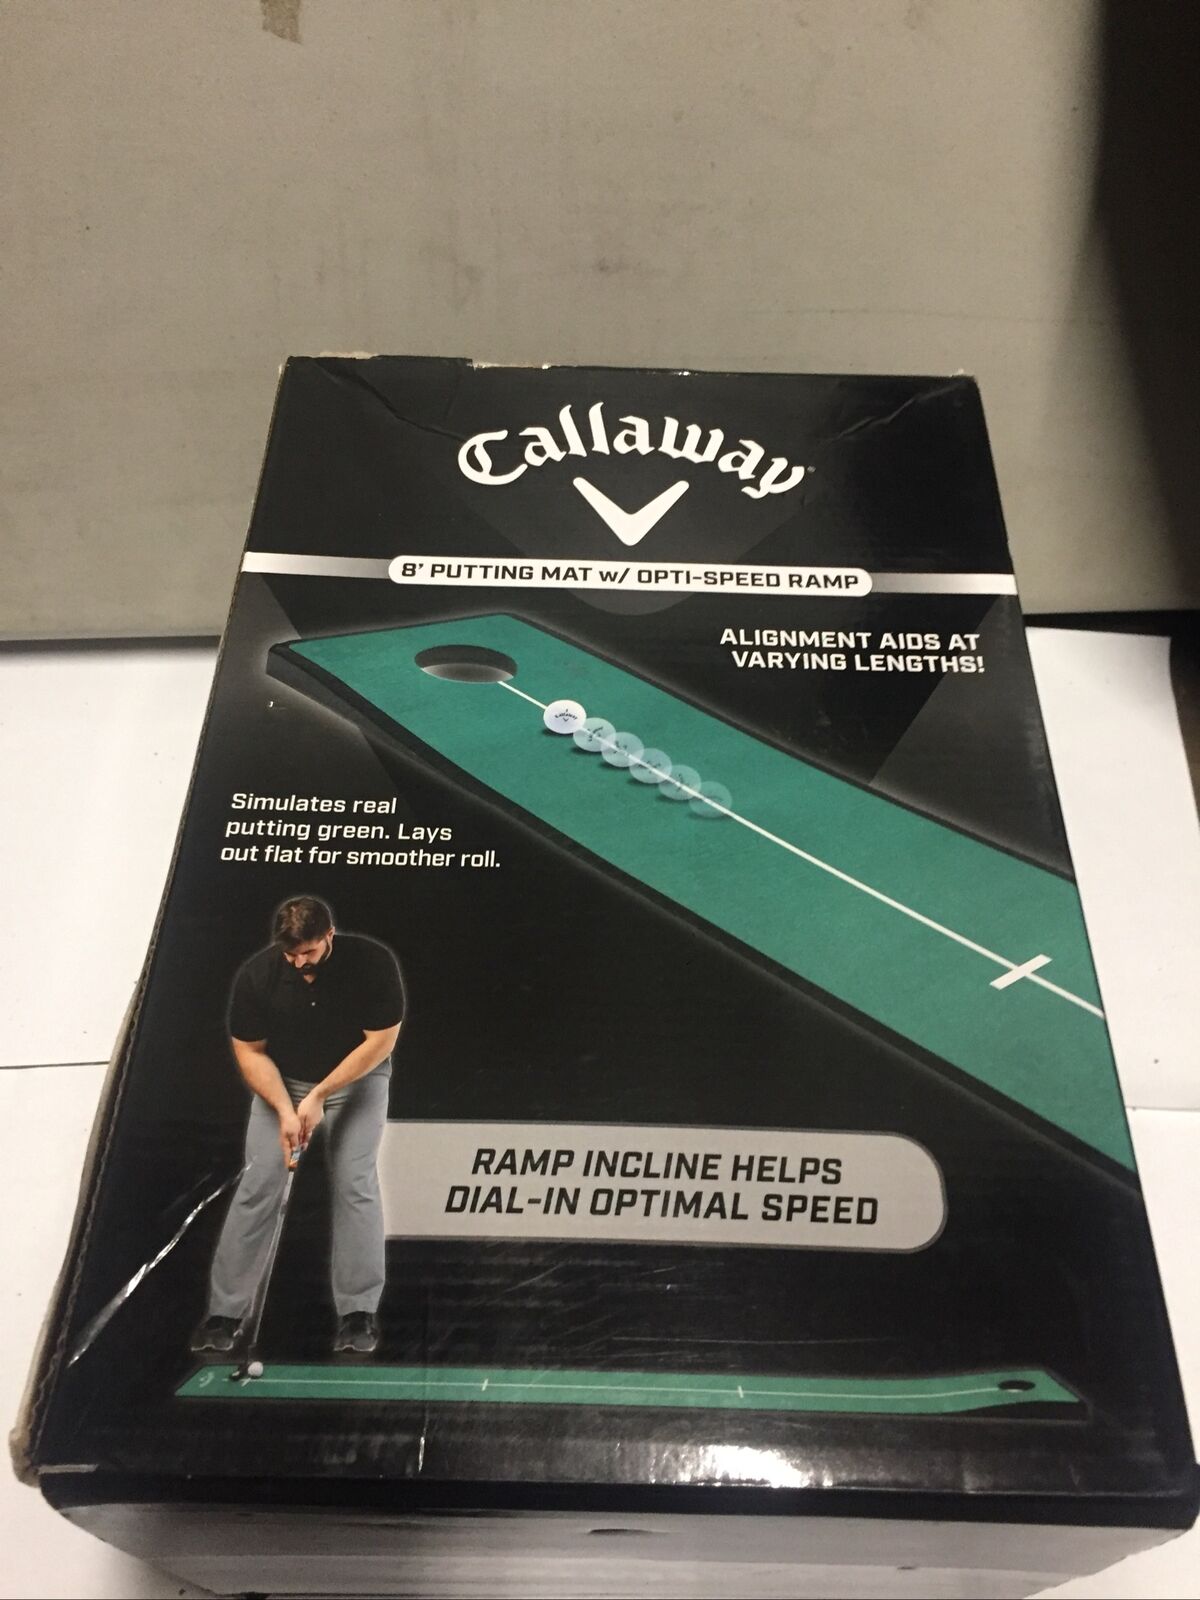 New Callaway - 8ft Putting Golf Mat with Opti-Speed Ramp 8’ Long X 1’ Wide